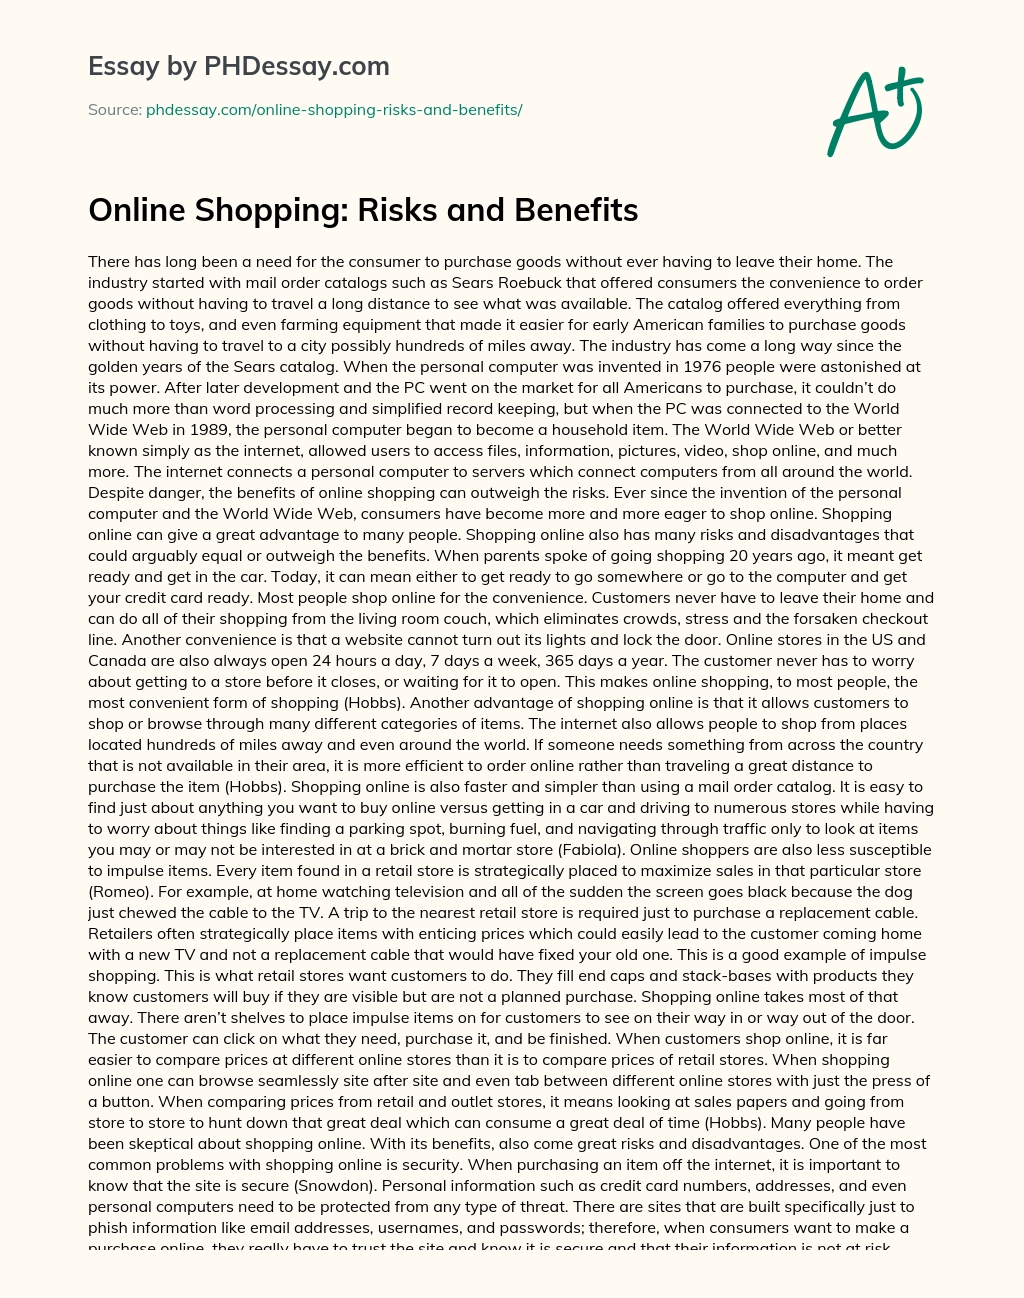 risk of online shopping essay